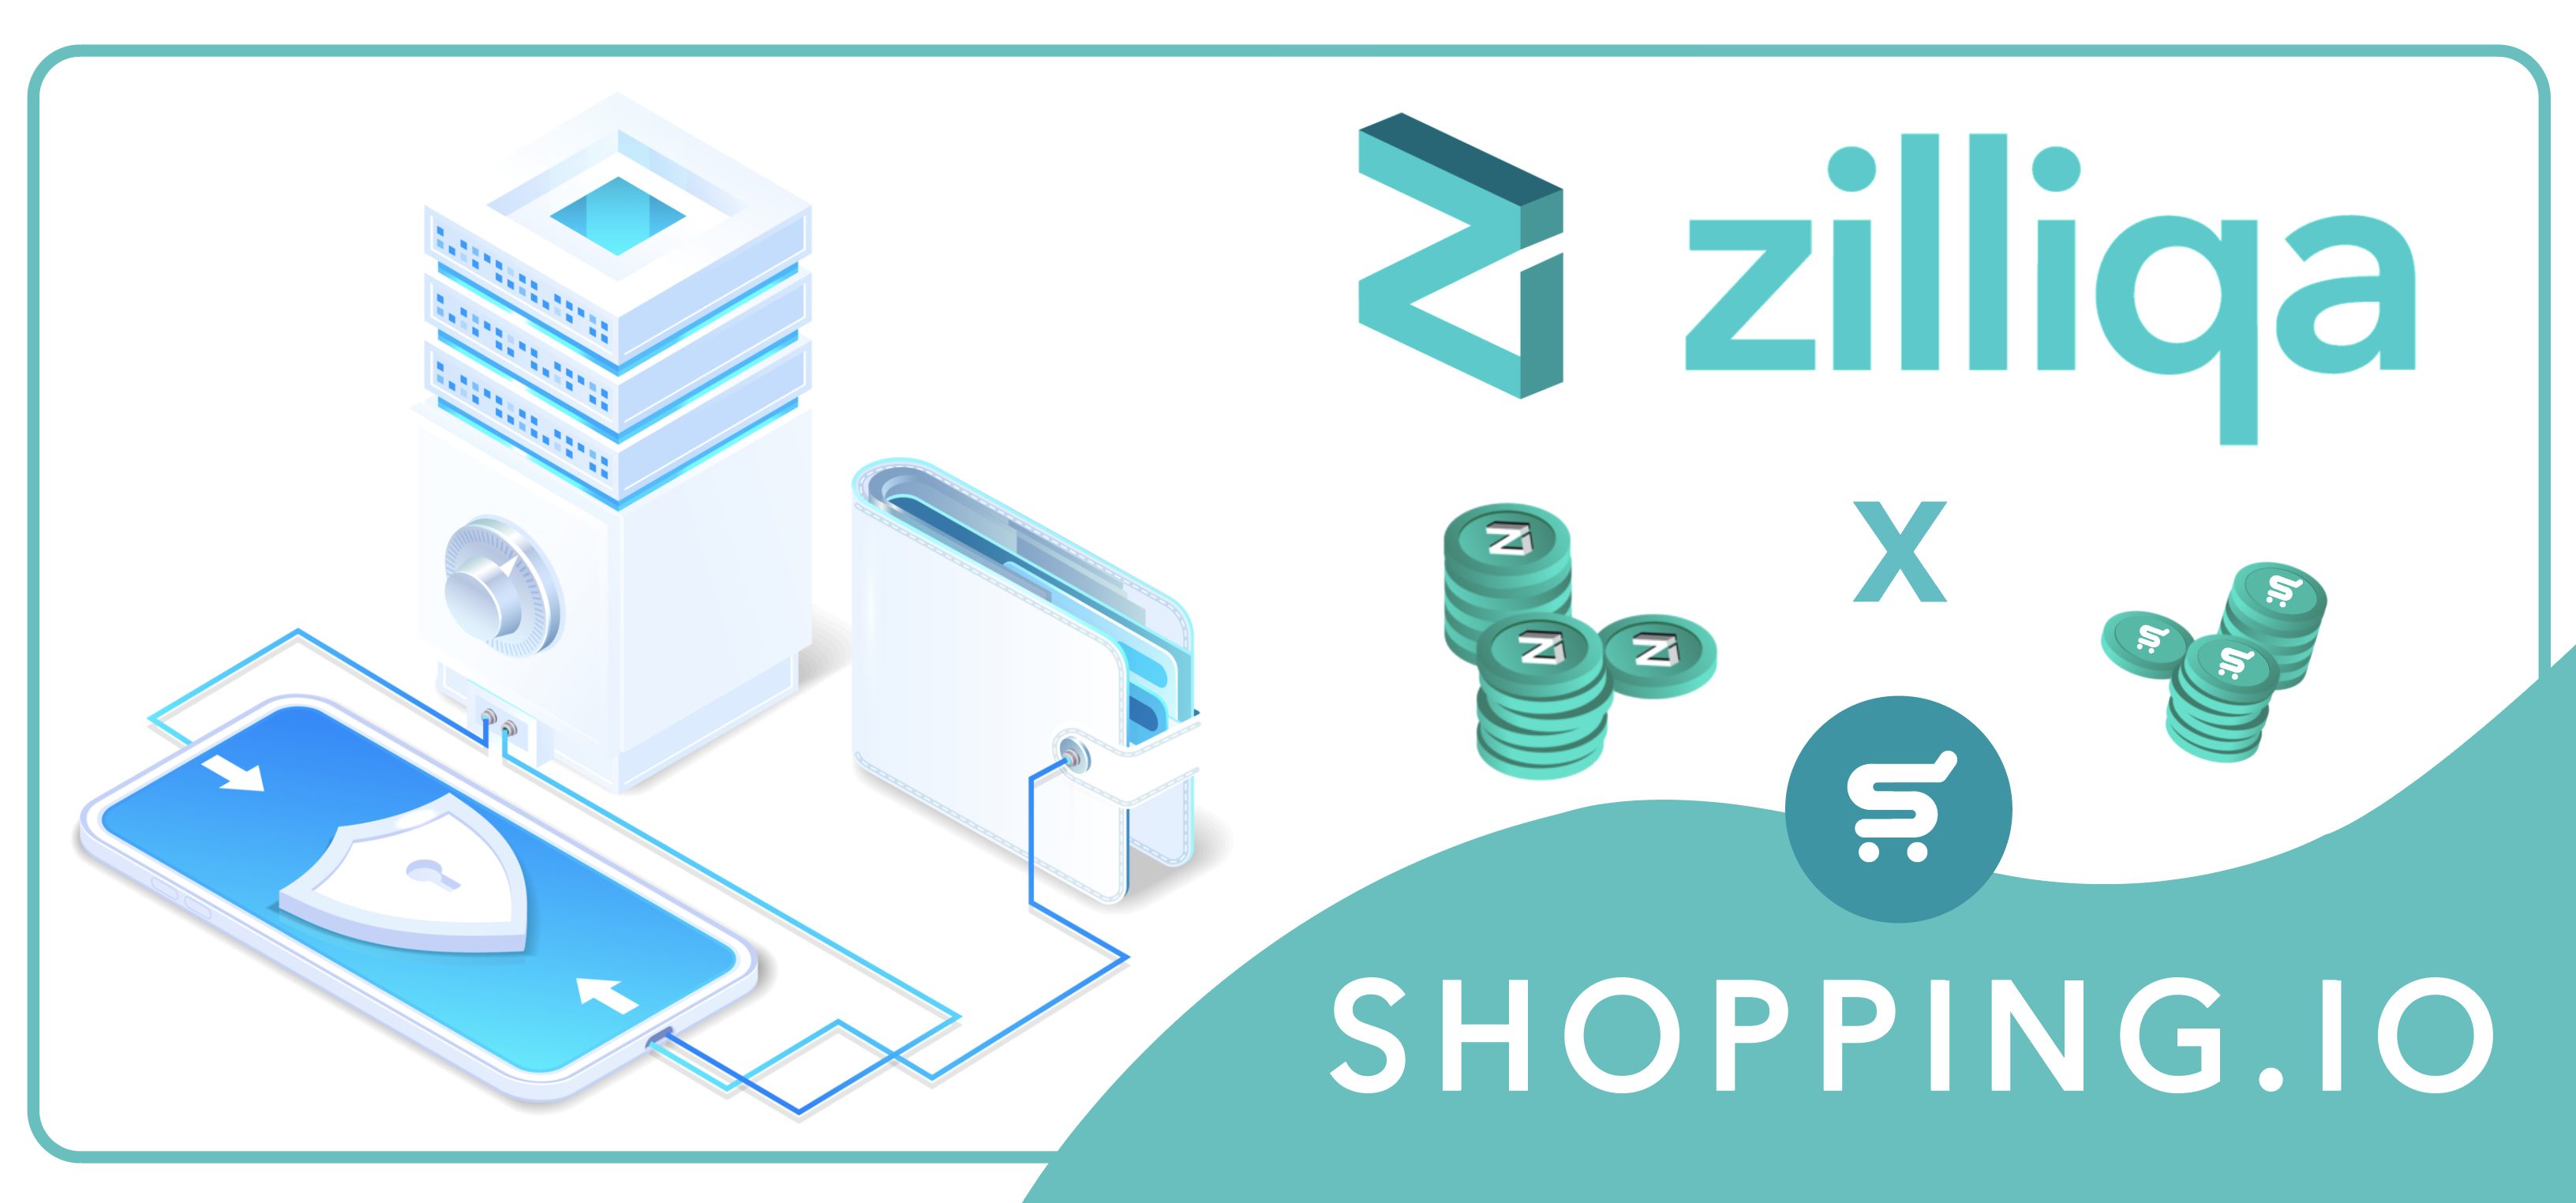 Zilliqa Aand Shopping_io Cemented A Partnership To Make ...